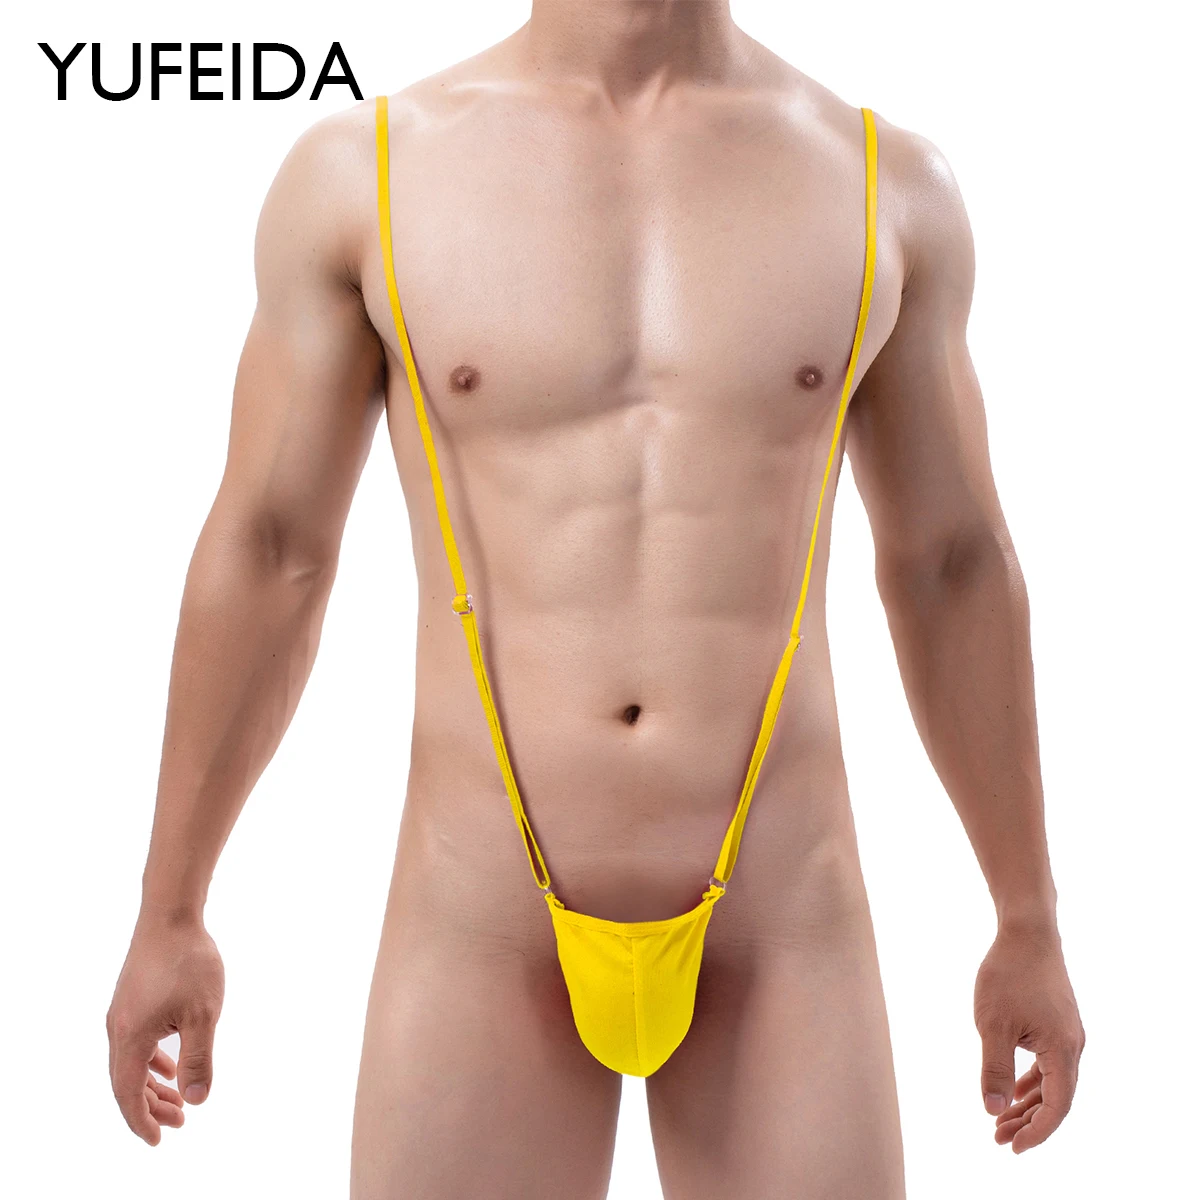 

YUFEIDA Mens Beach Swimming Swimwear Thong Suspender Jockstrap Underwear Bodysuit Male Gay Sexy Erotic Lingerie Leotard Thongs